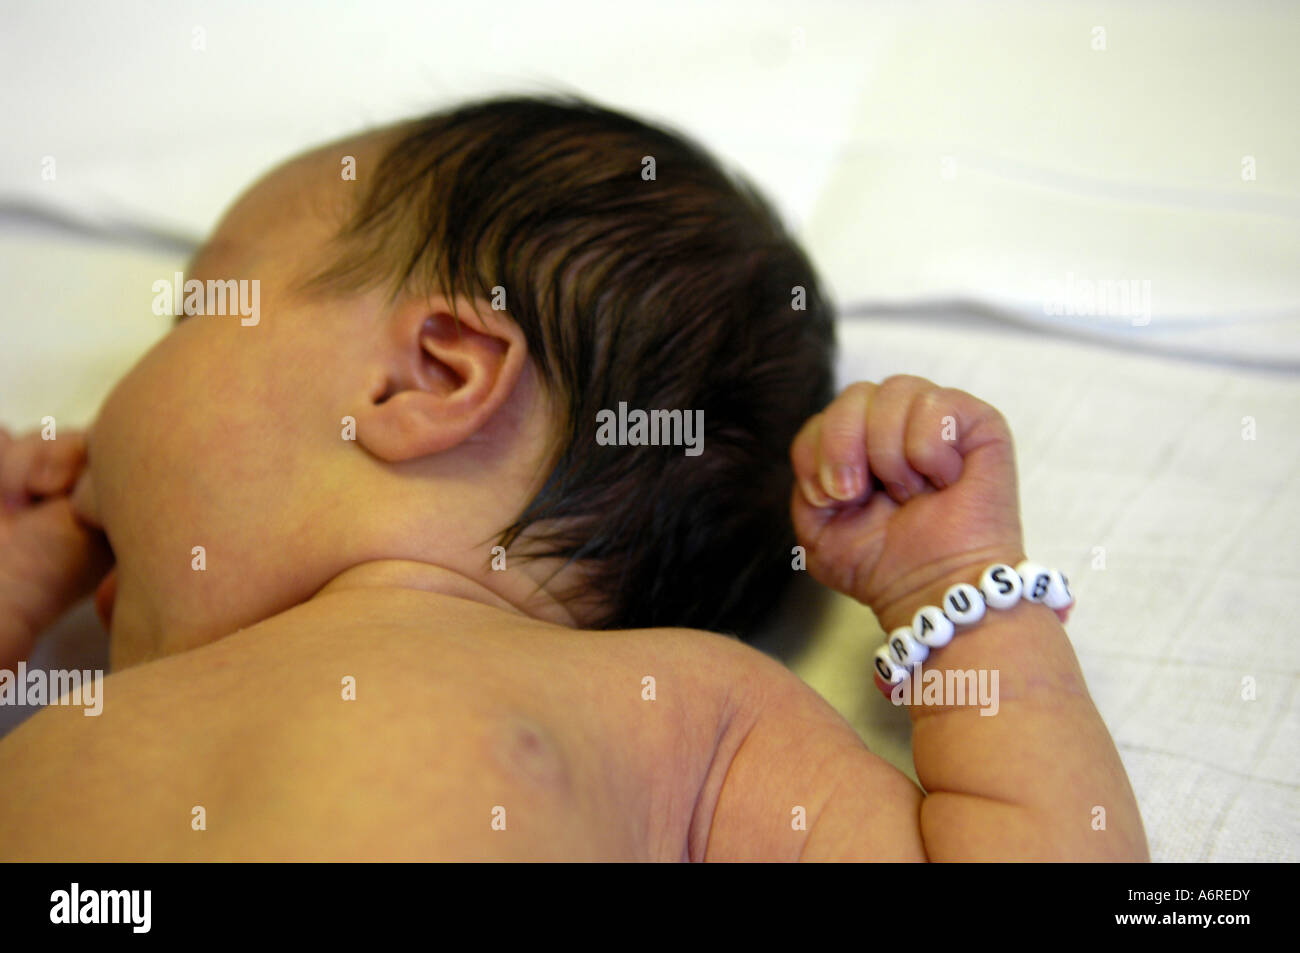 neugeborenes Baby Name Tag Armband Identität dunkle Haare kaukasischen vier  Tage alte Farbe Farbe Stockfotografie - Alamy